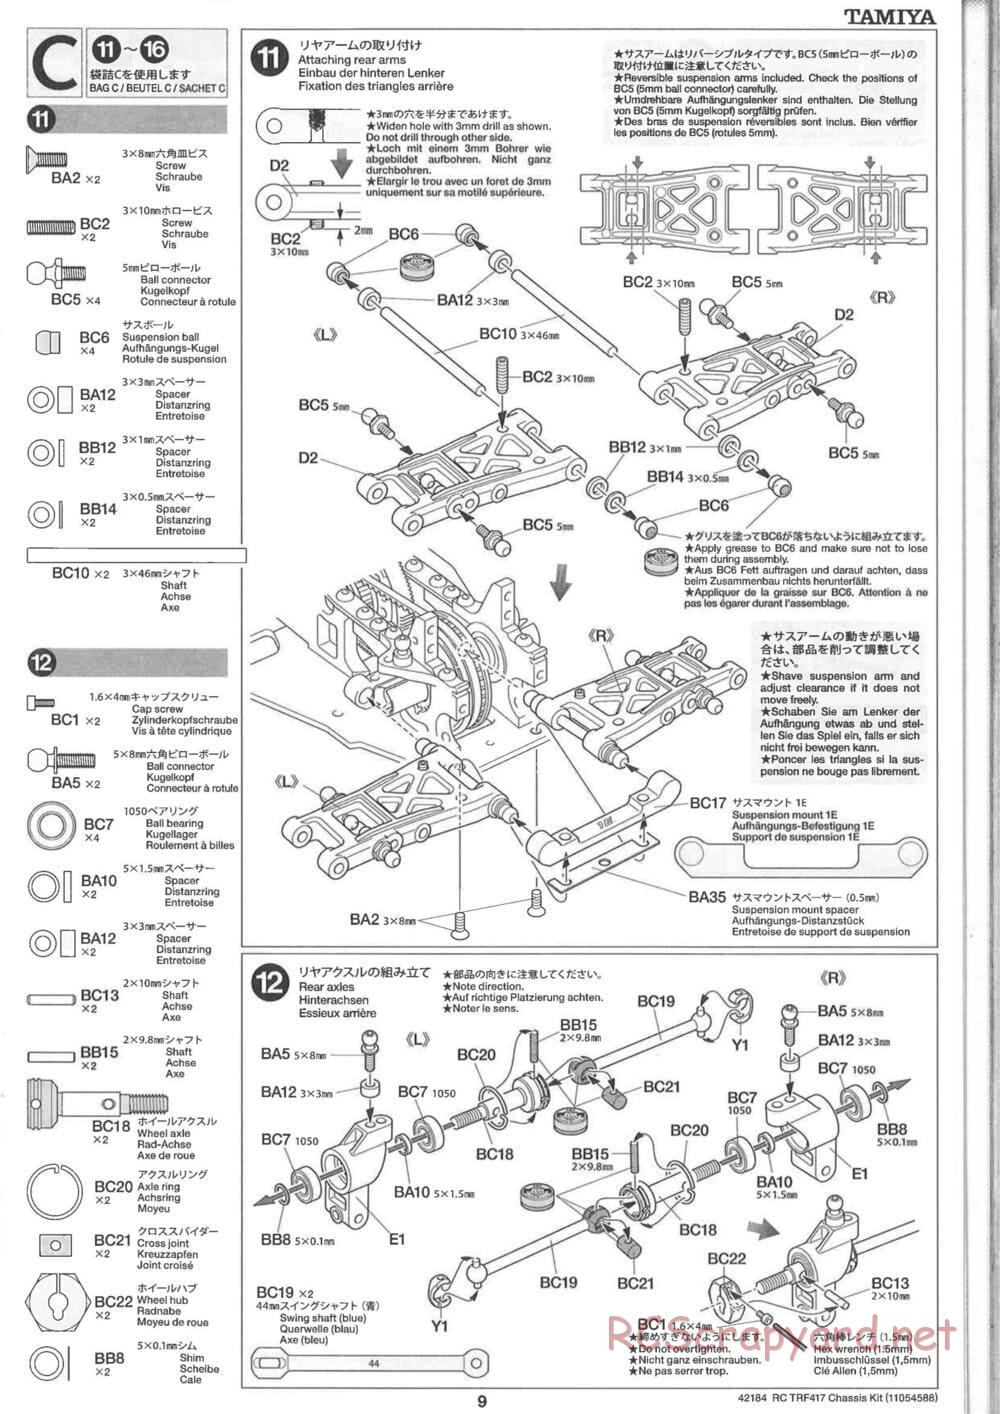 Tamiya - TRF417 Chassis - Manual - Page 9